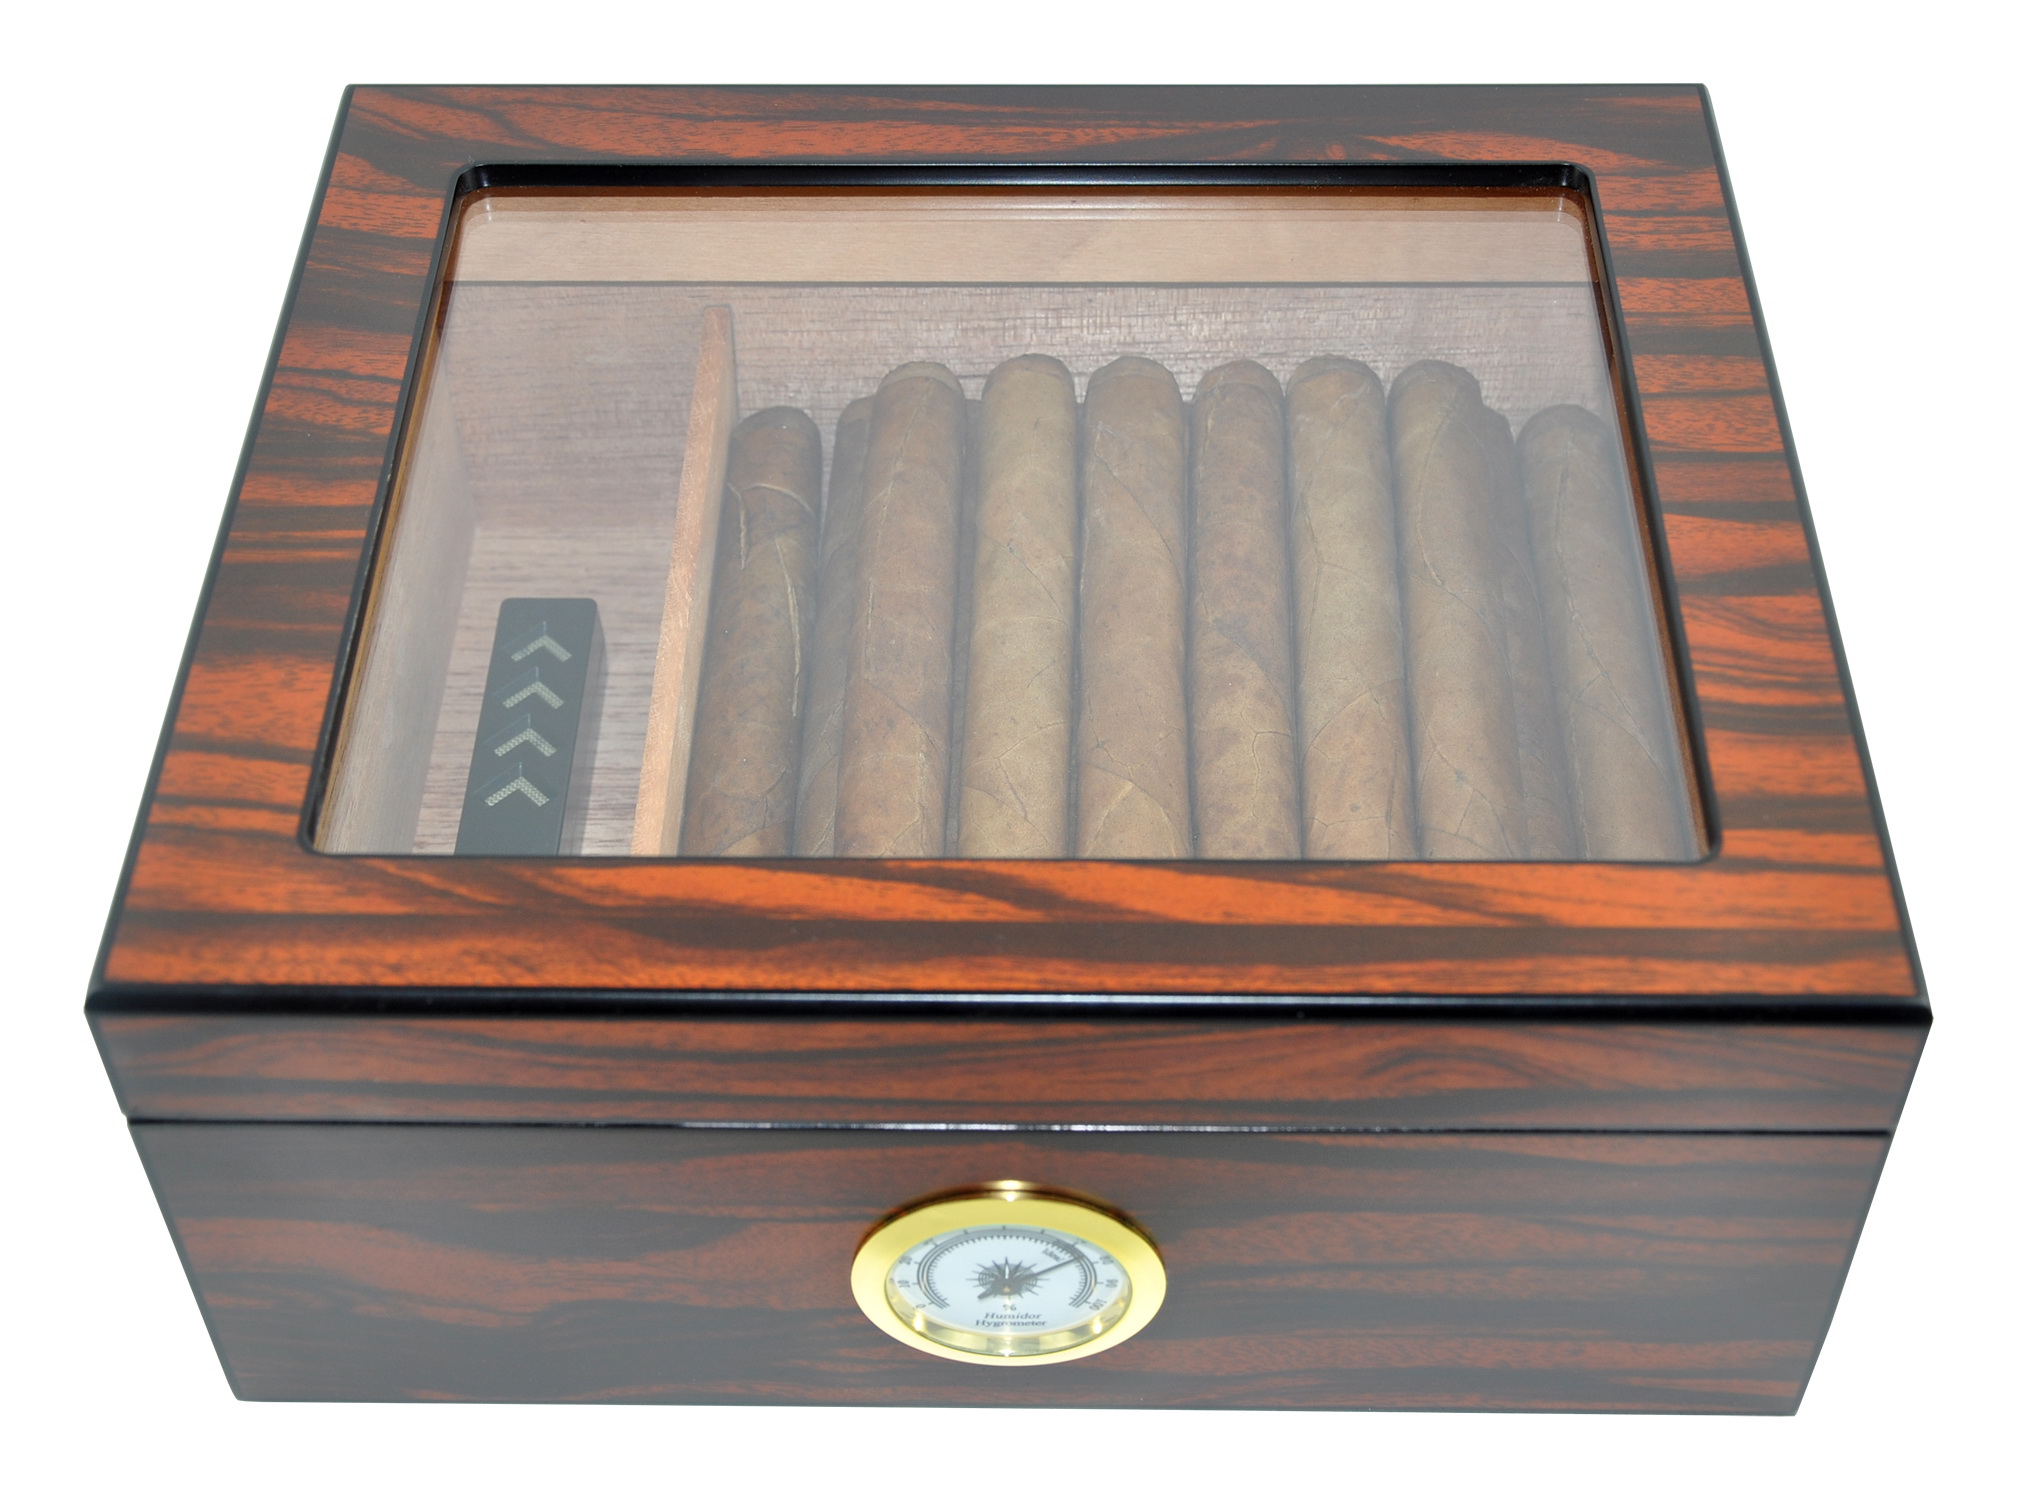 DUCIHBA Humidor Box - Holds 25-50 Cigars - Tempered Glass Display - Spanish Cedar Wood - Brown Color - image 4 of 7